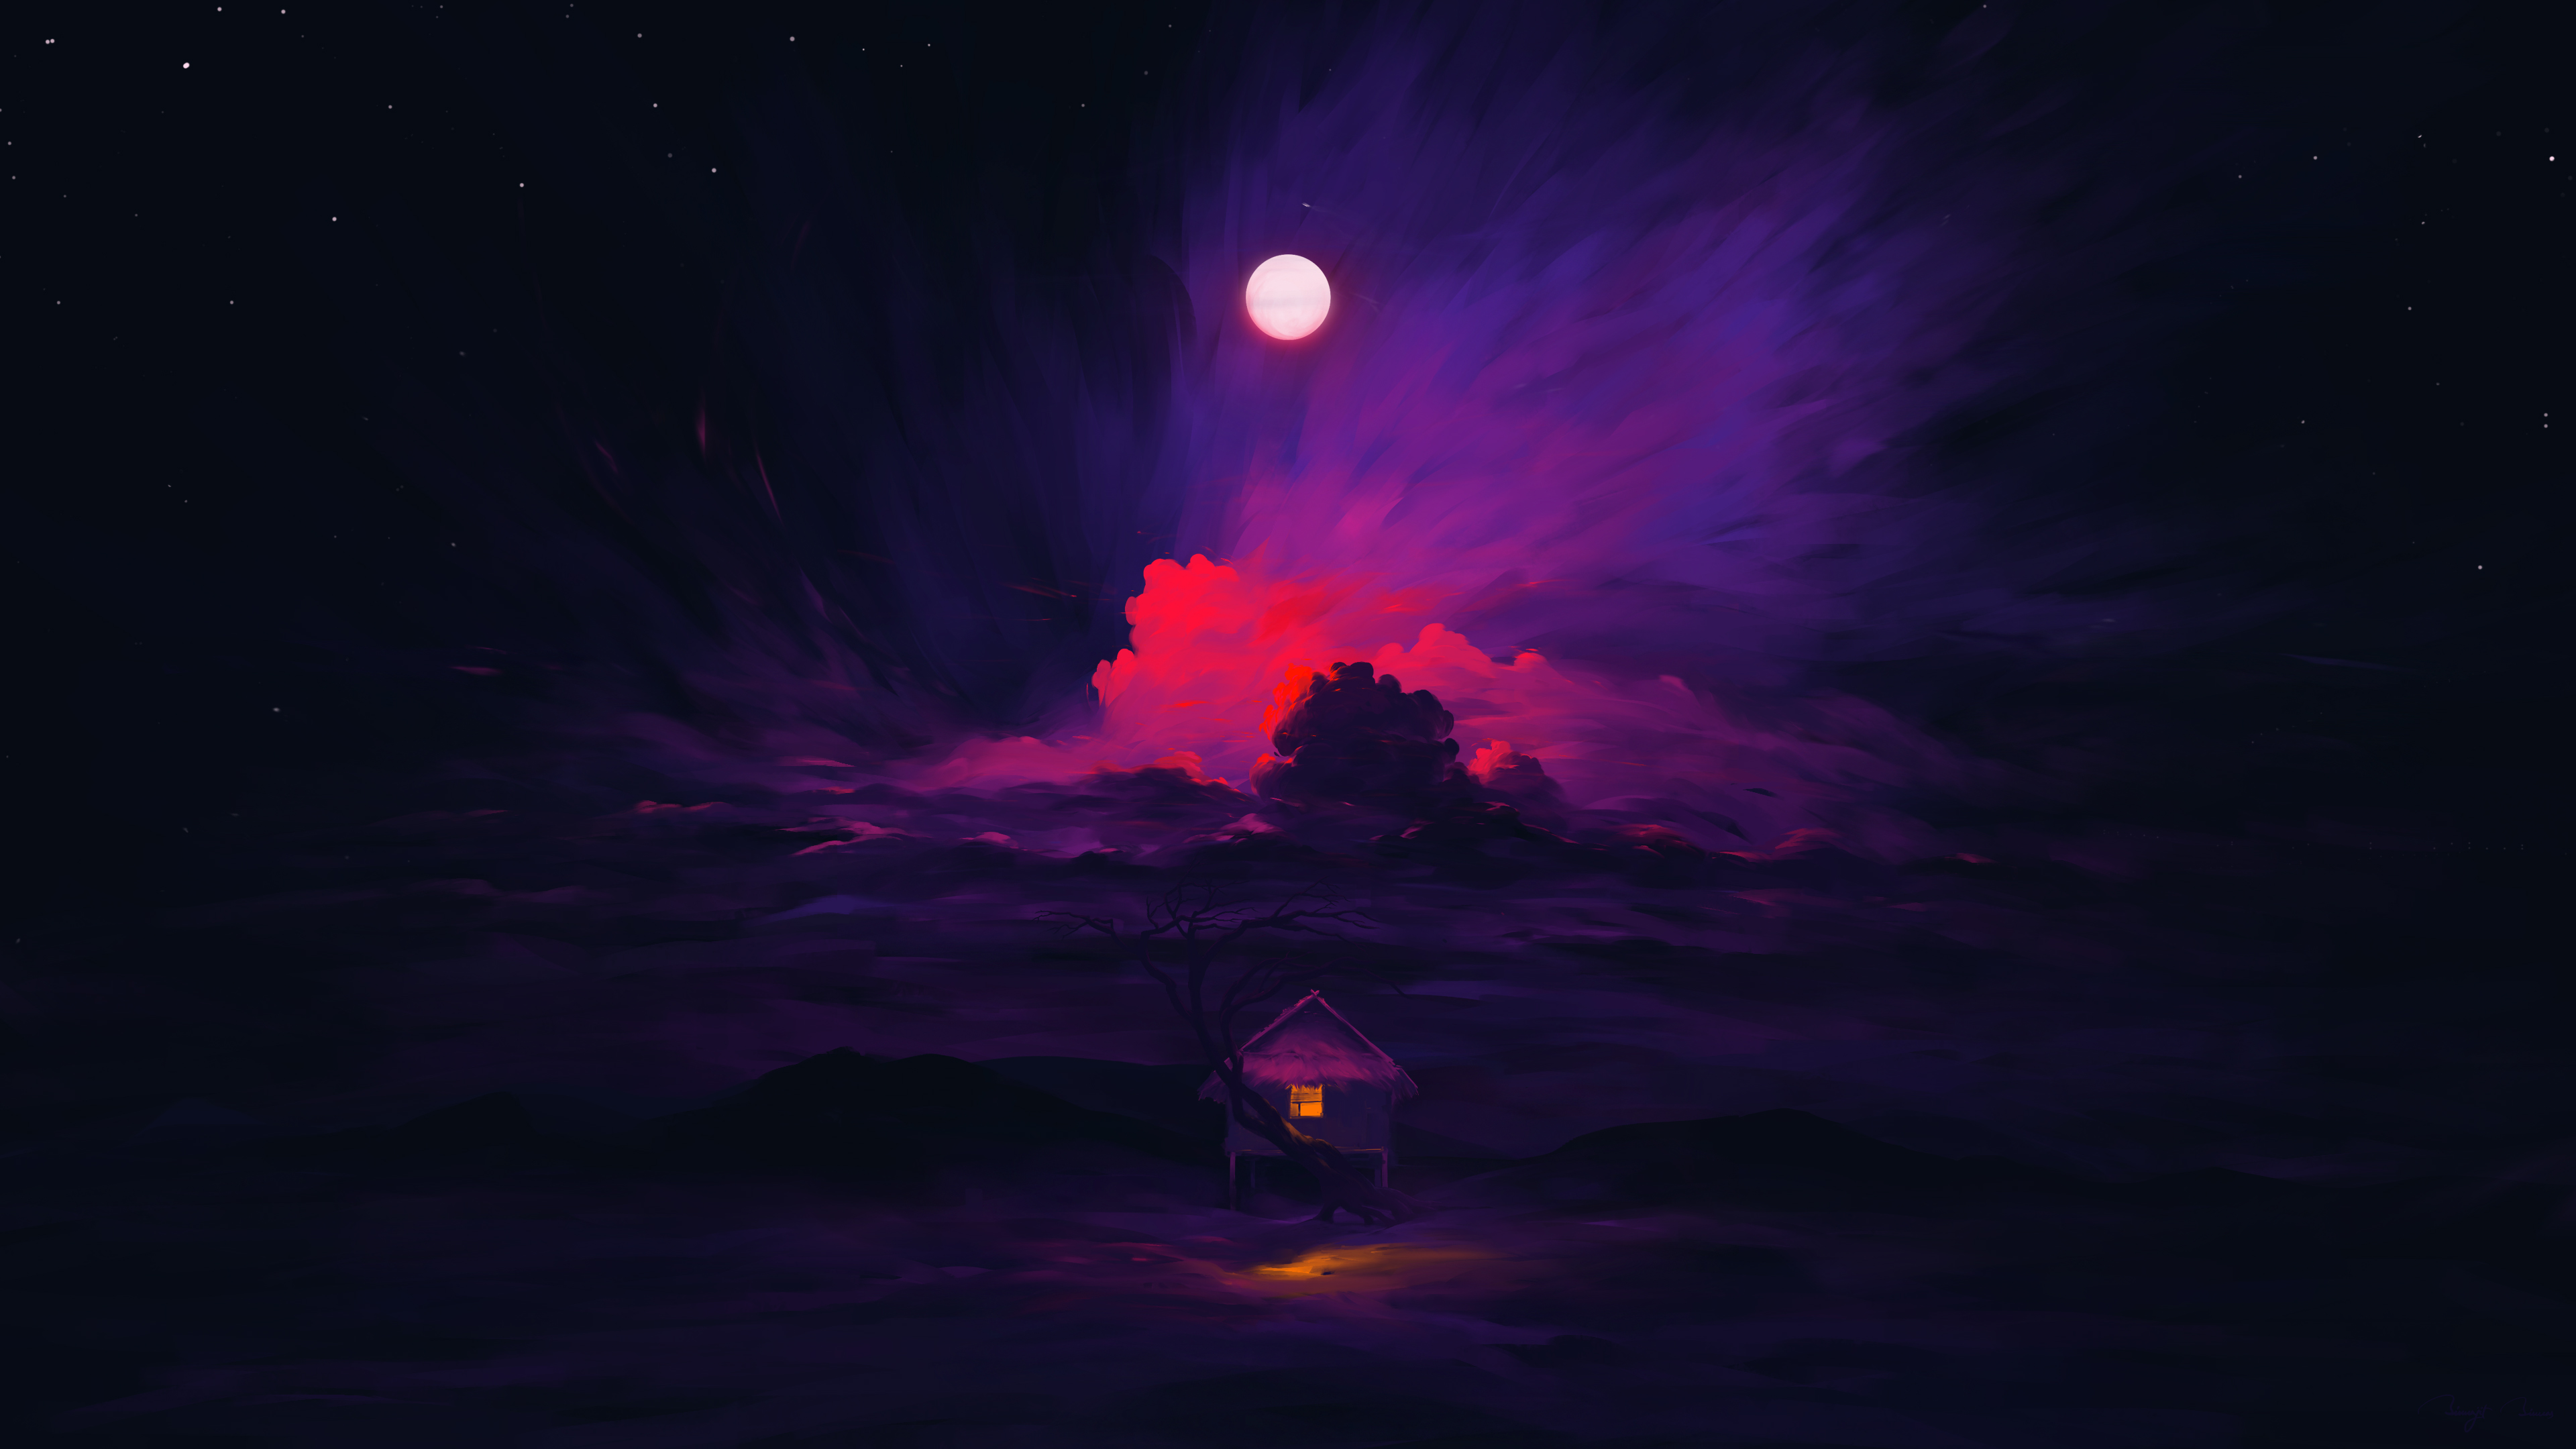 General 3840x2160 BisBiswas digital art artwork illustration landscape clouds night nightscape Moon house stars 4K signature